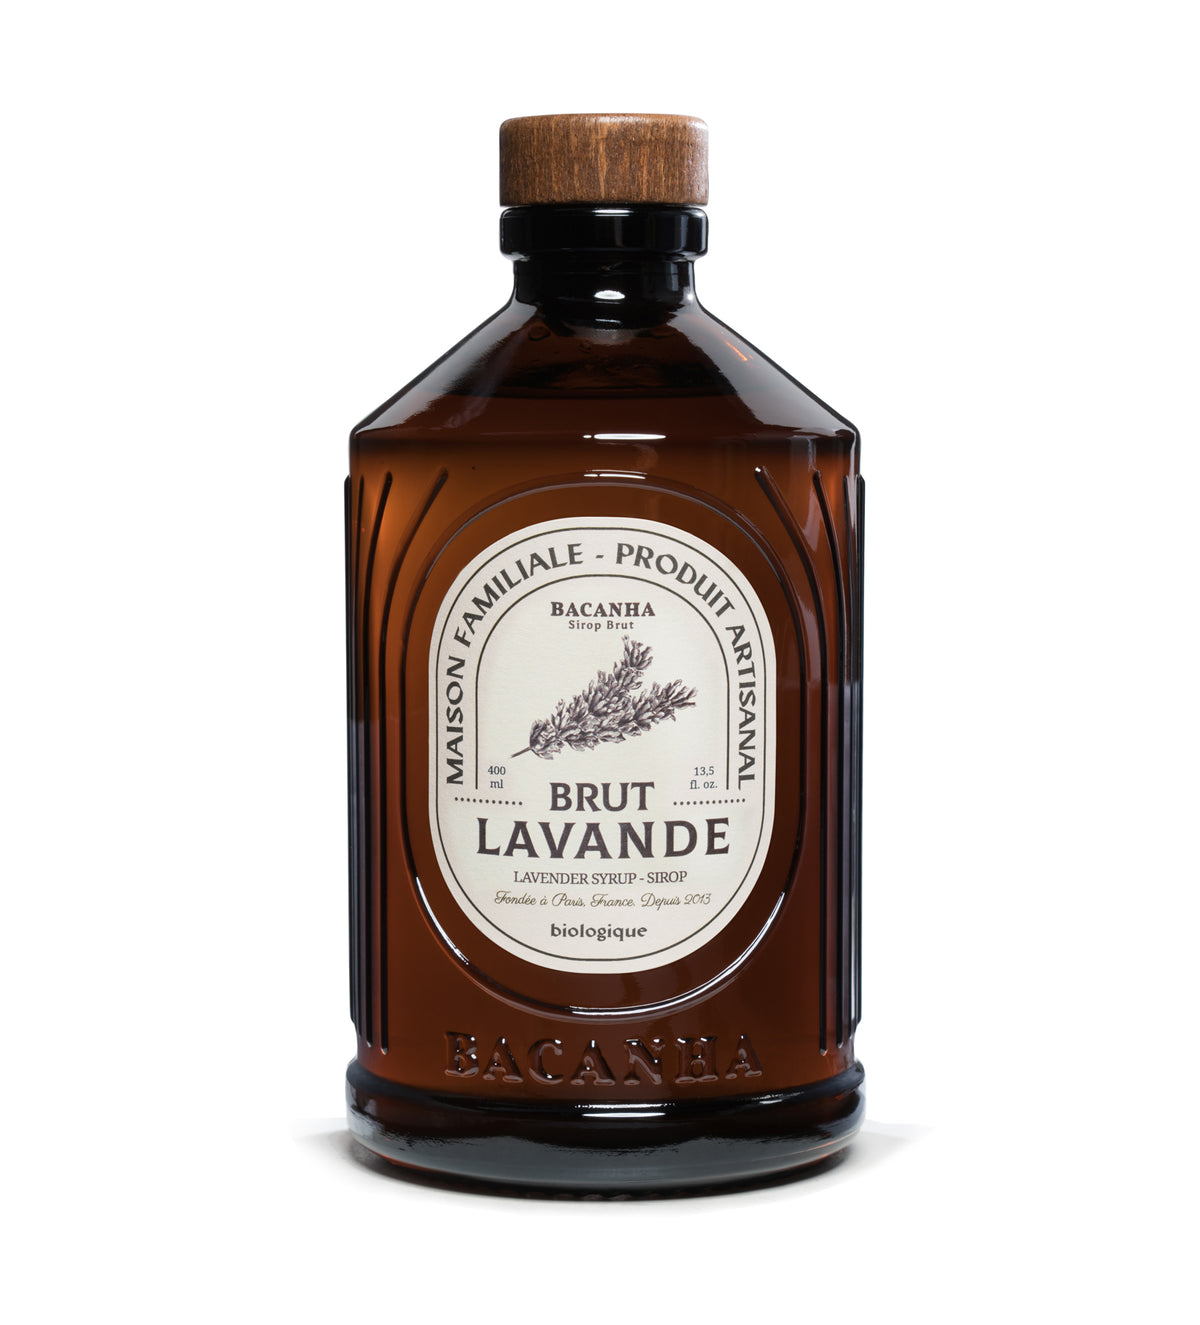 &lt;tc&gt;Bacanha Lavender flavored syrup [ORGANIC]&lt;/tc&gt;